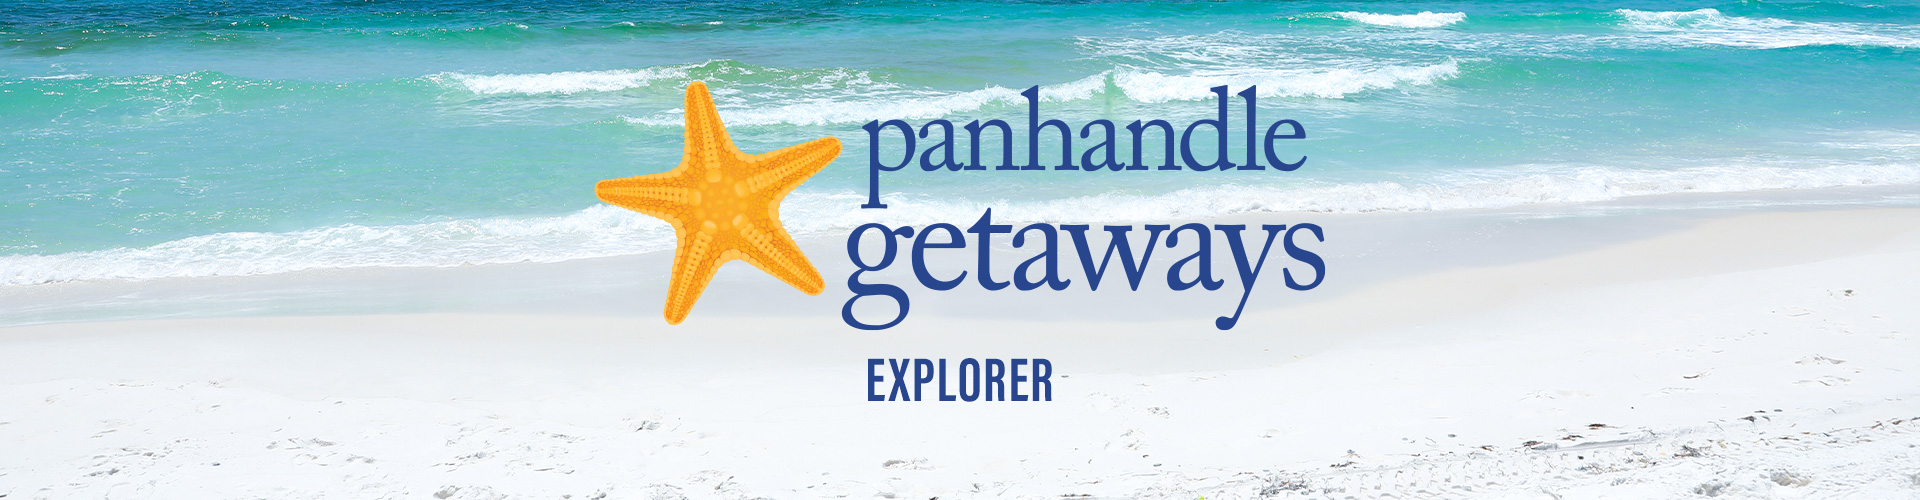 Panhandle Getaways 30A Explorer Banner